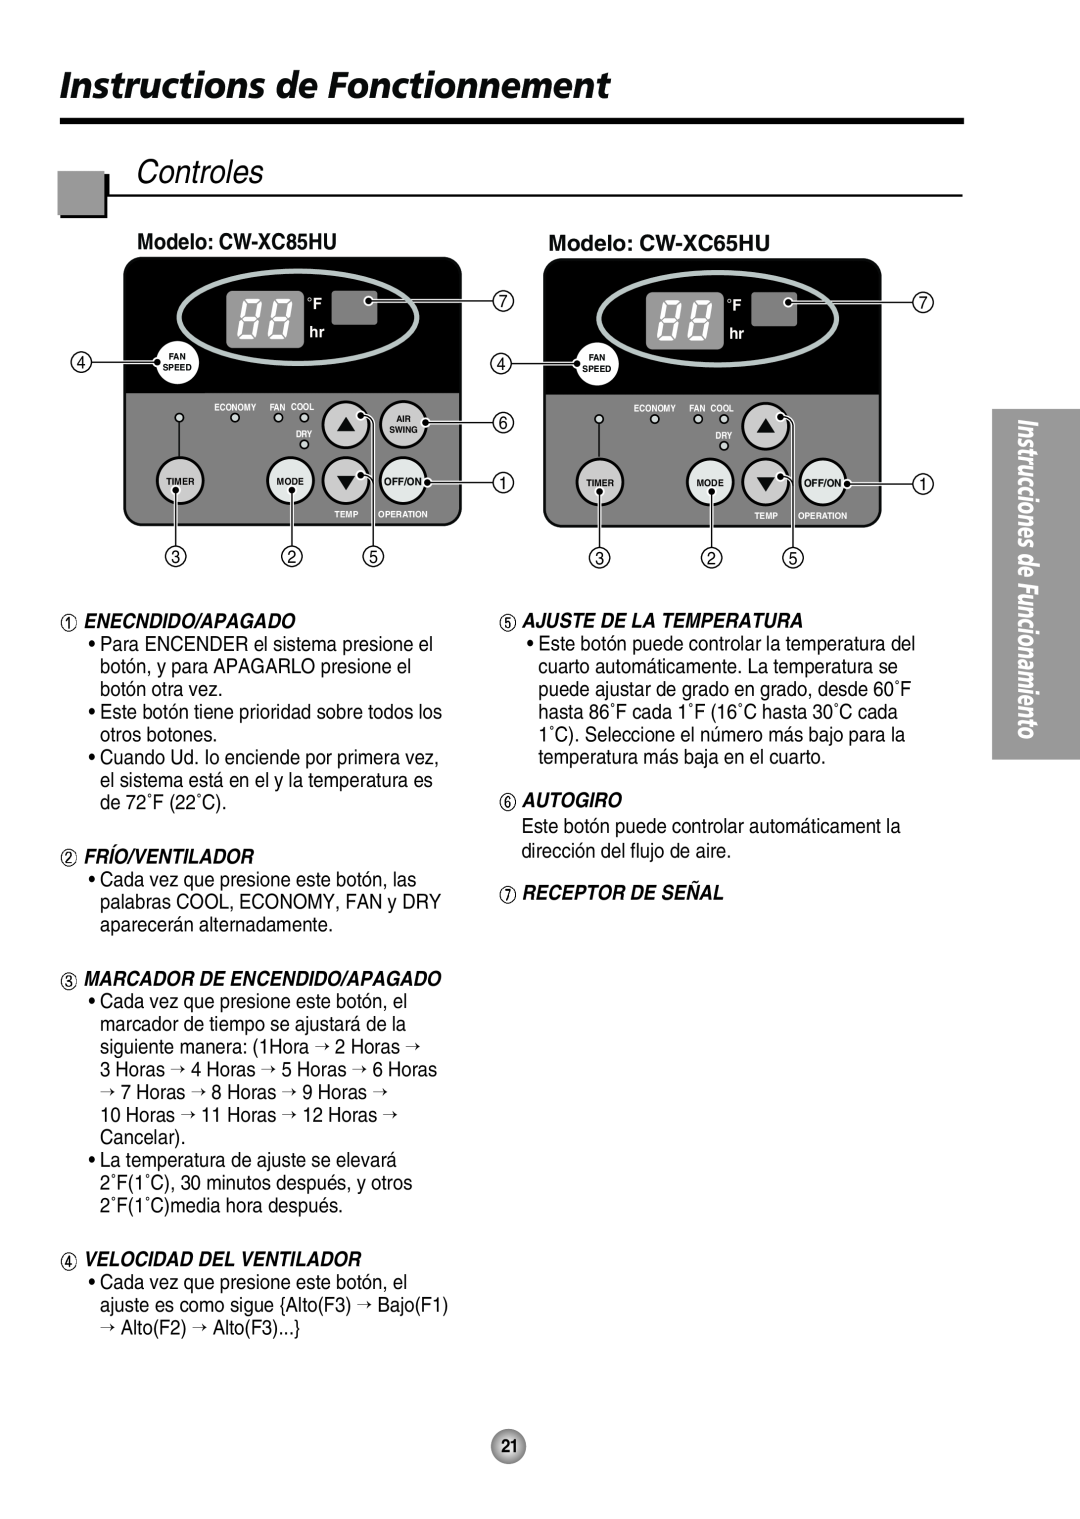 Panasonic CW-XC85HU, CW-XC65HU Instructions de Fonctionnement, Controles, Enecndido/Apagado, Frío/Ventilador, Autogiro 